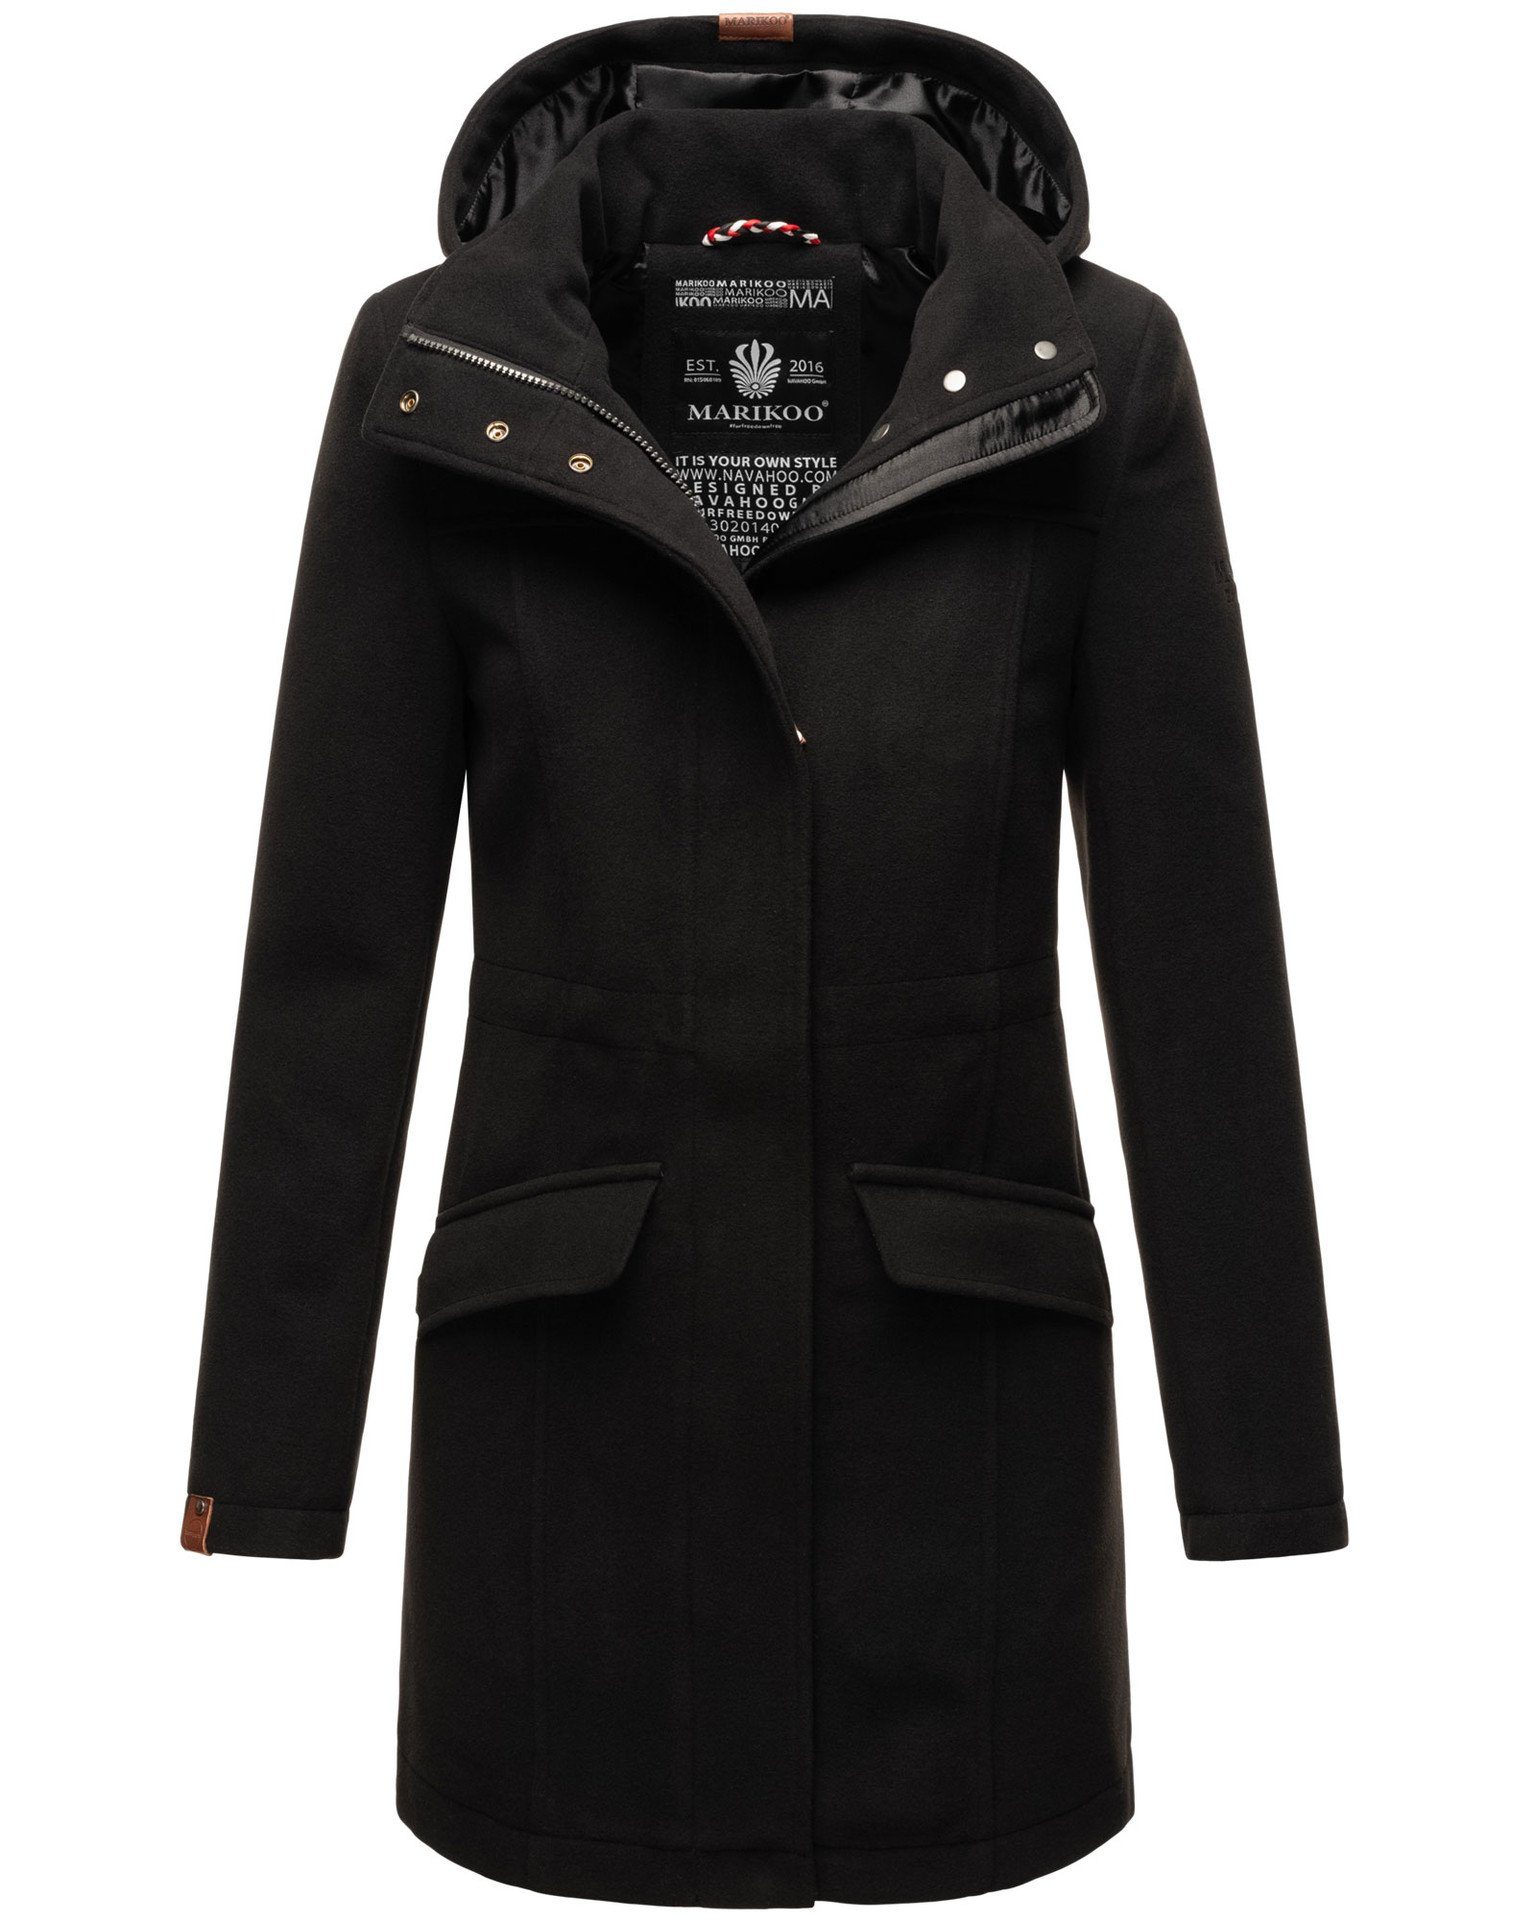 Marikoo Winterjacke Leilaniaa Mantel in schwarz abnehmbarer Woll mit Kapuze Optik